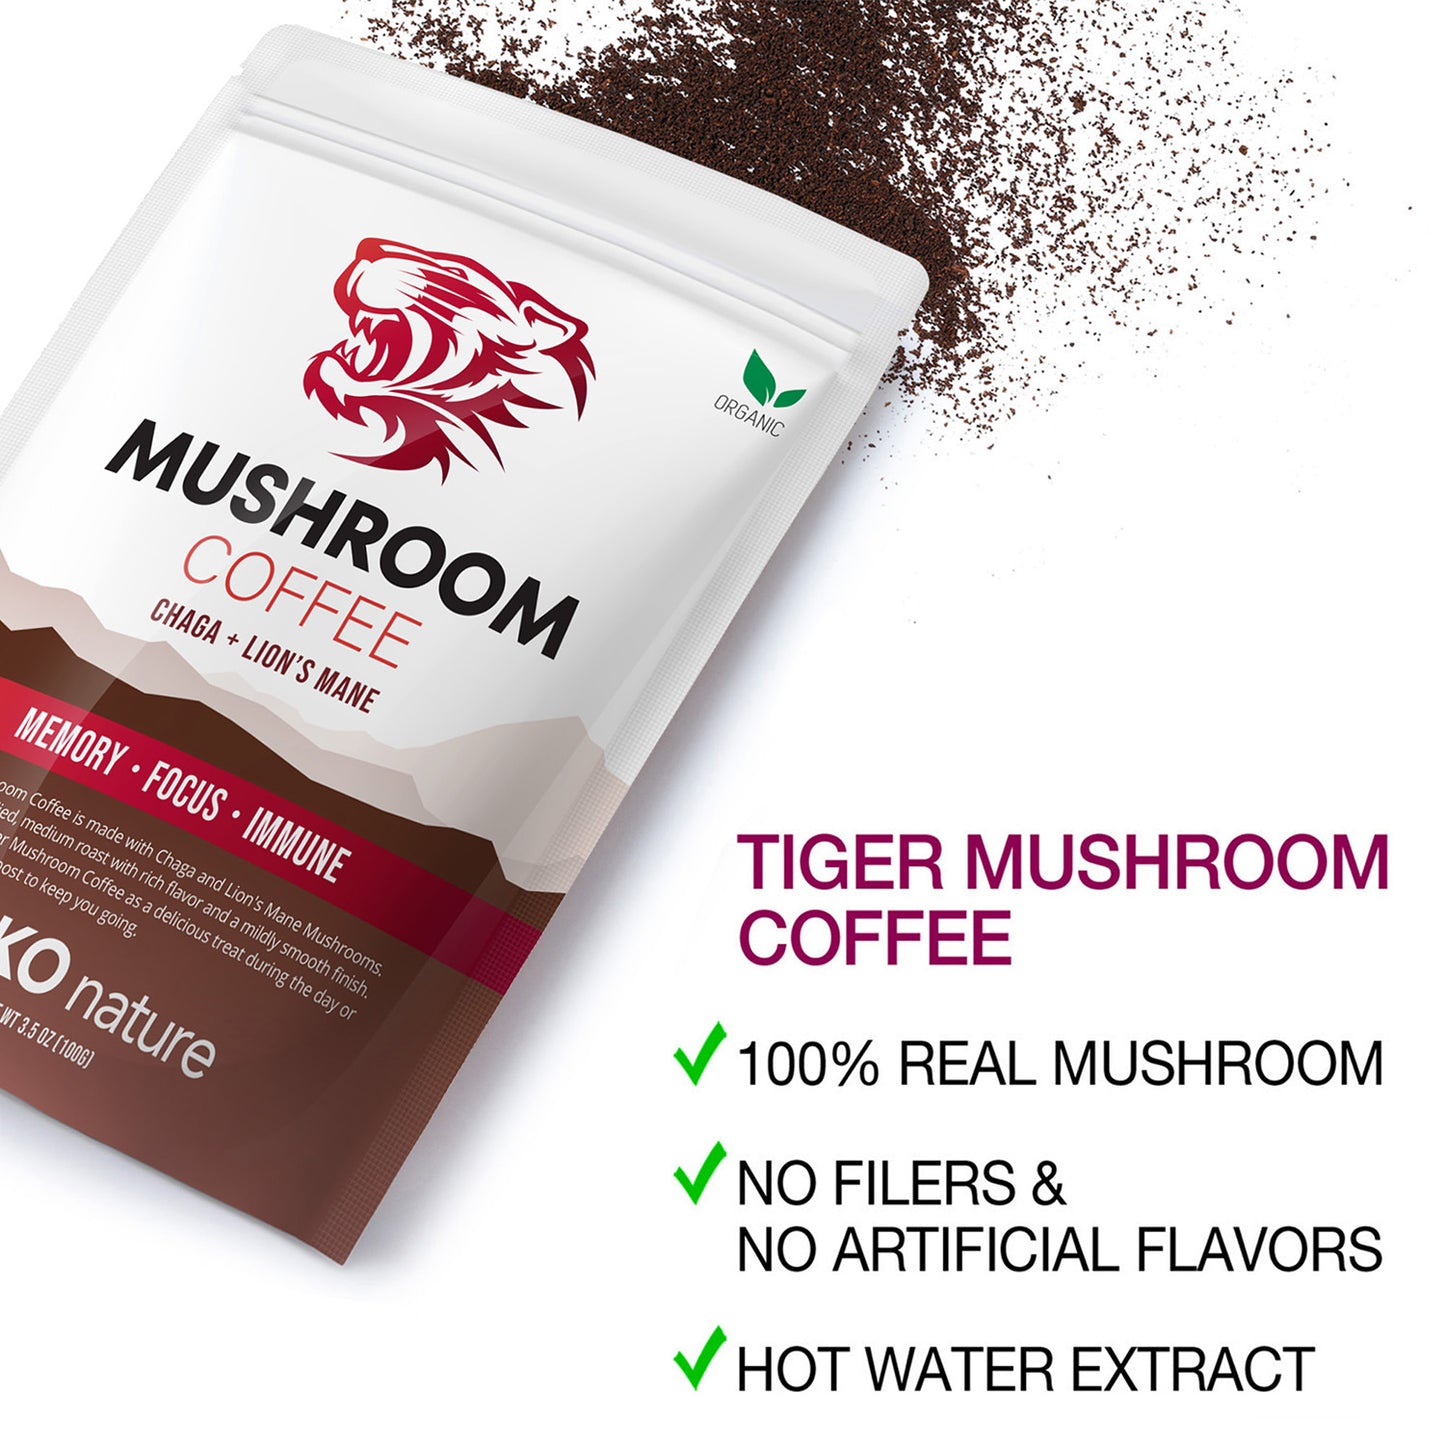 Tiger 2 Mushroom Coffee